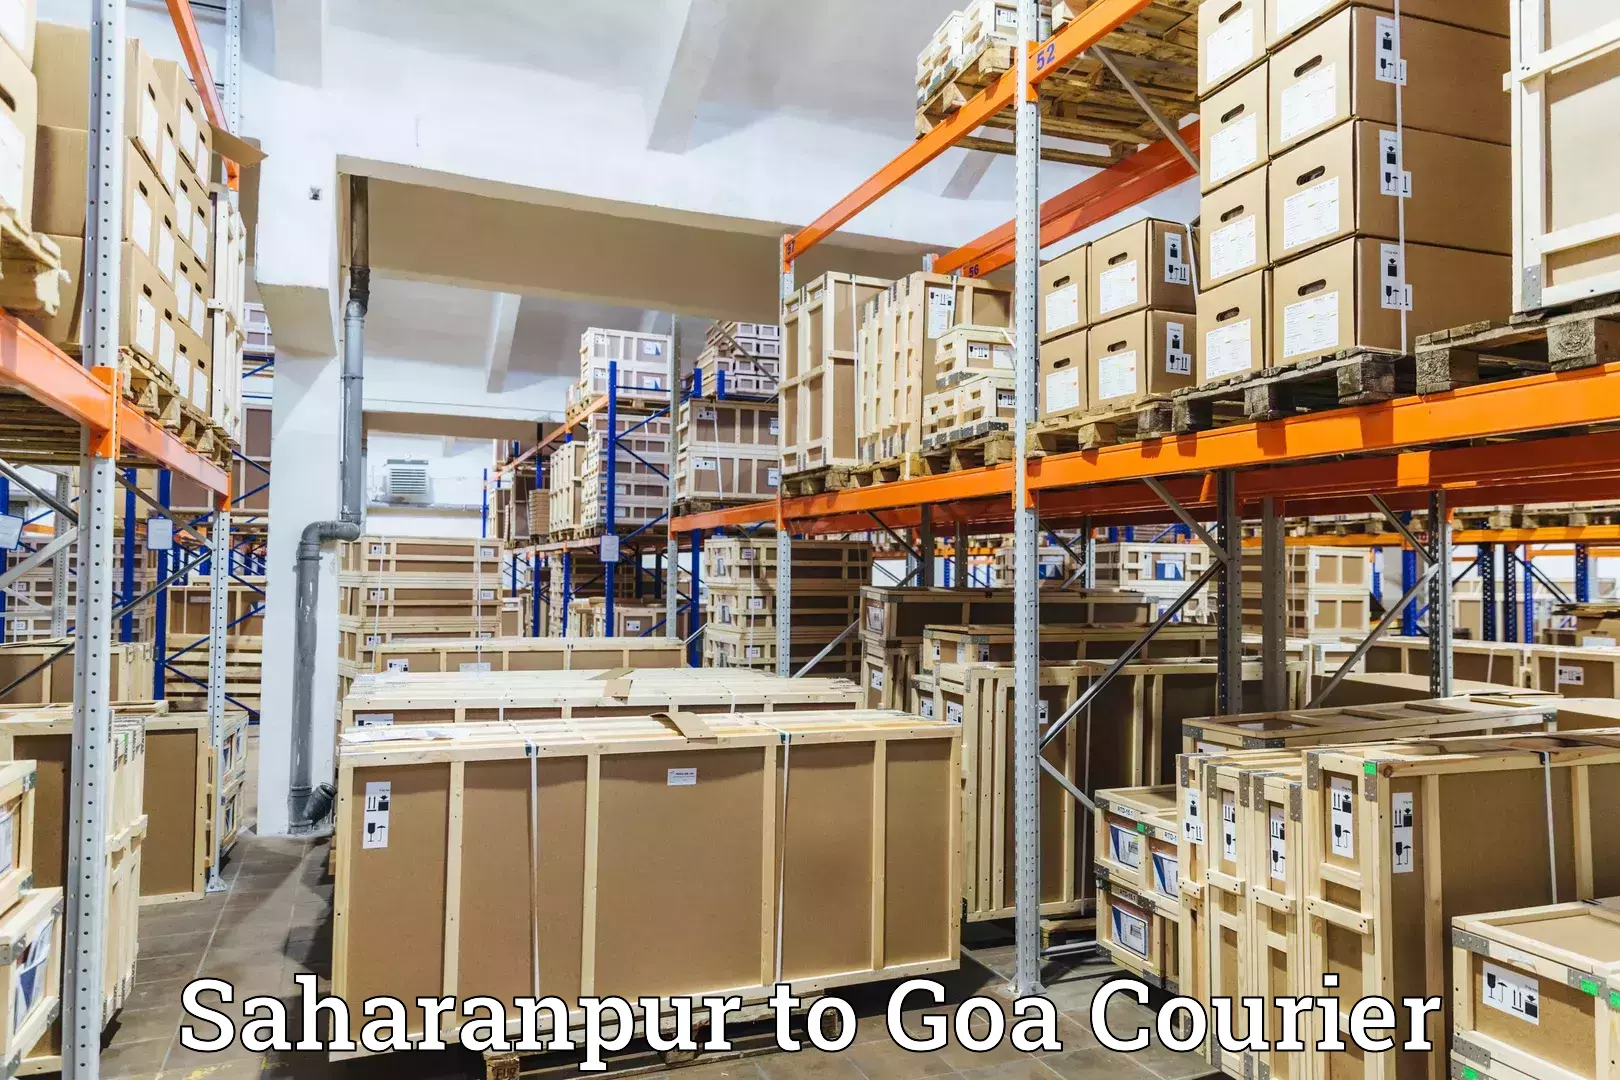 Courier service innovation Saharanpur to Panaji